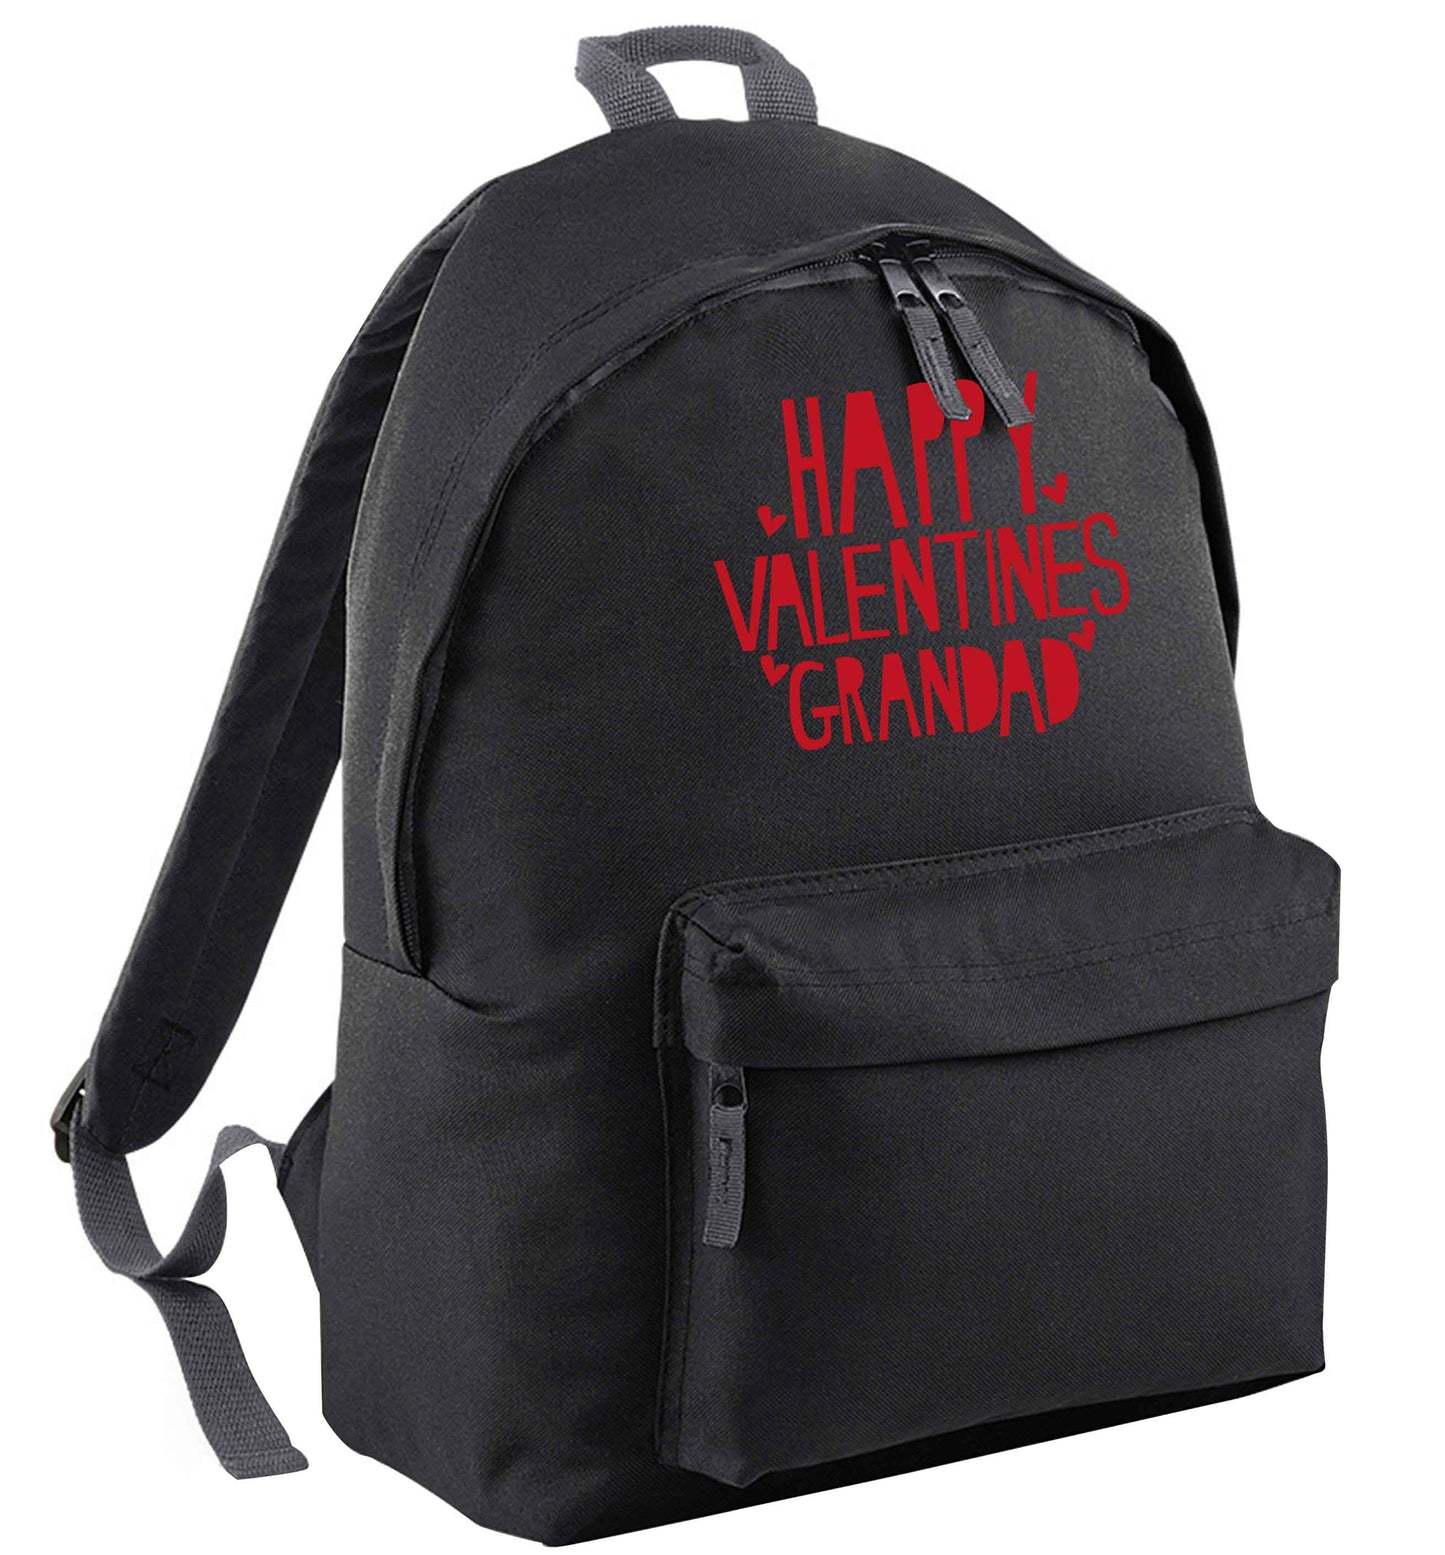 Happy valentines grandad | Children's backpack